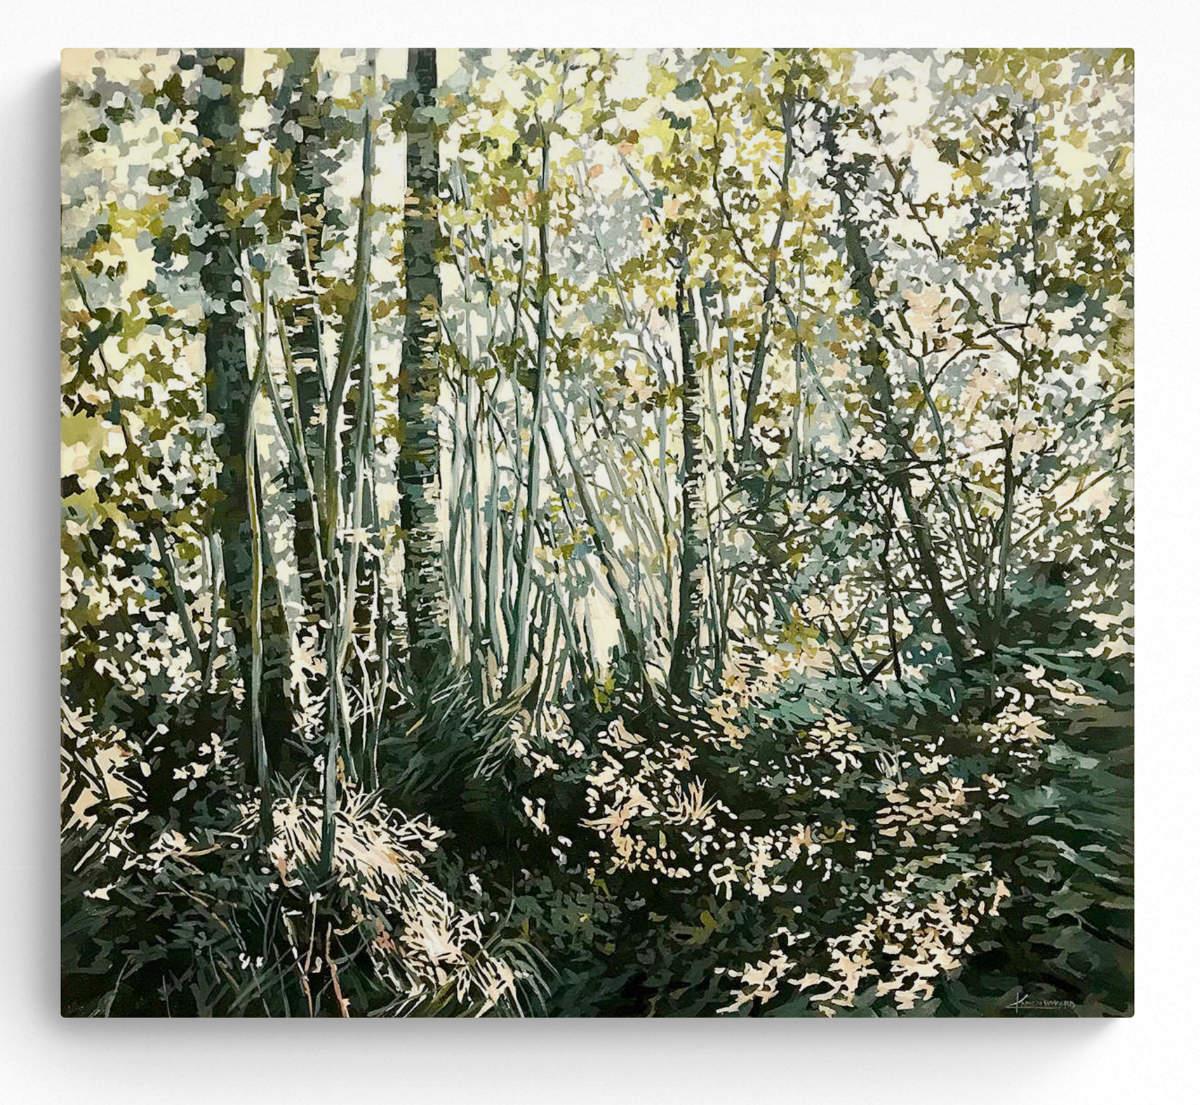 painting of a forest glade by artist Karen Wykerd